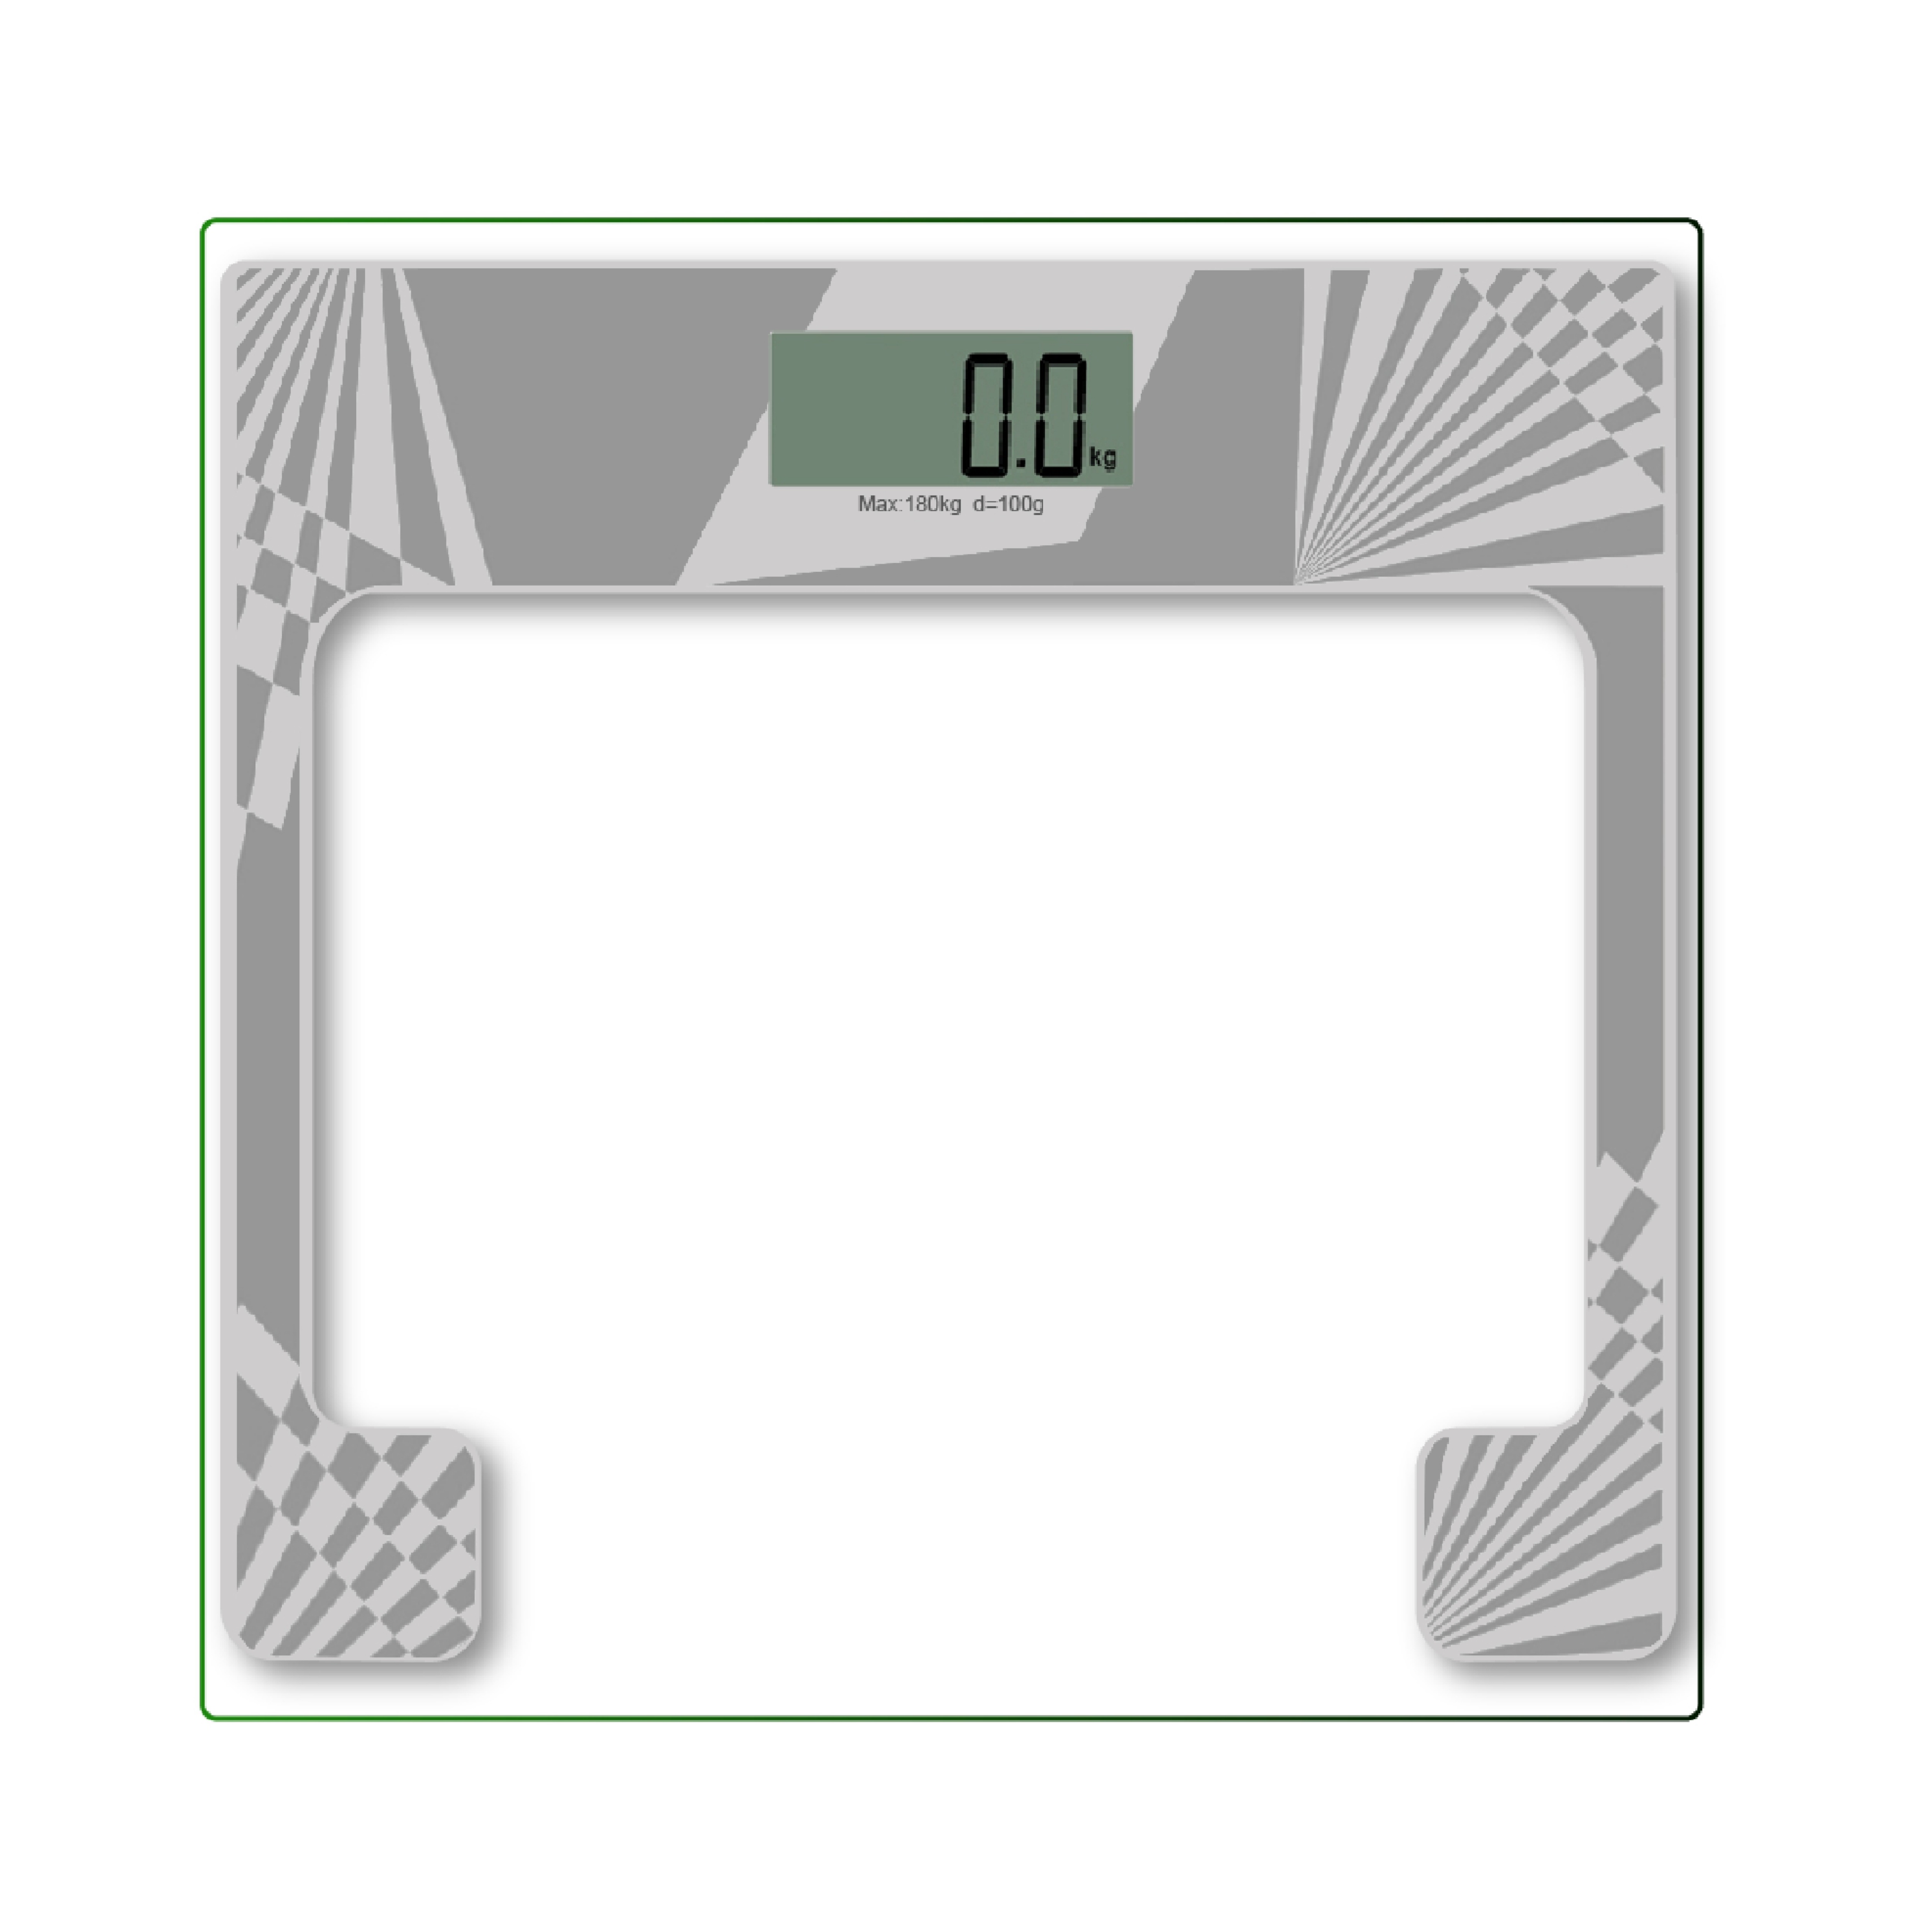 KS-2004 Household Smart Bathroom Weighing Scale Digital Body Scale